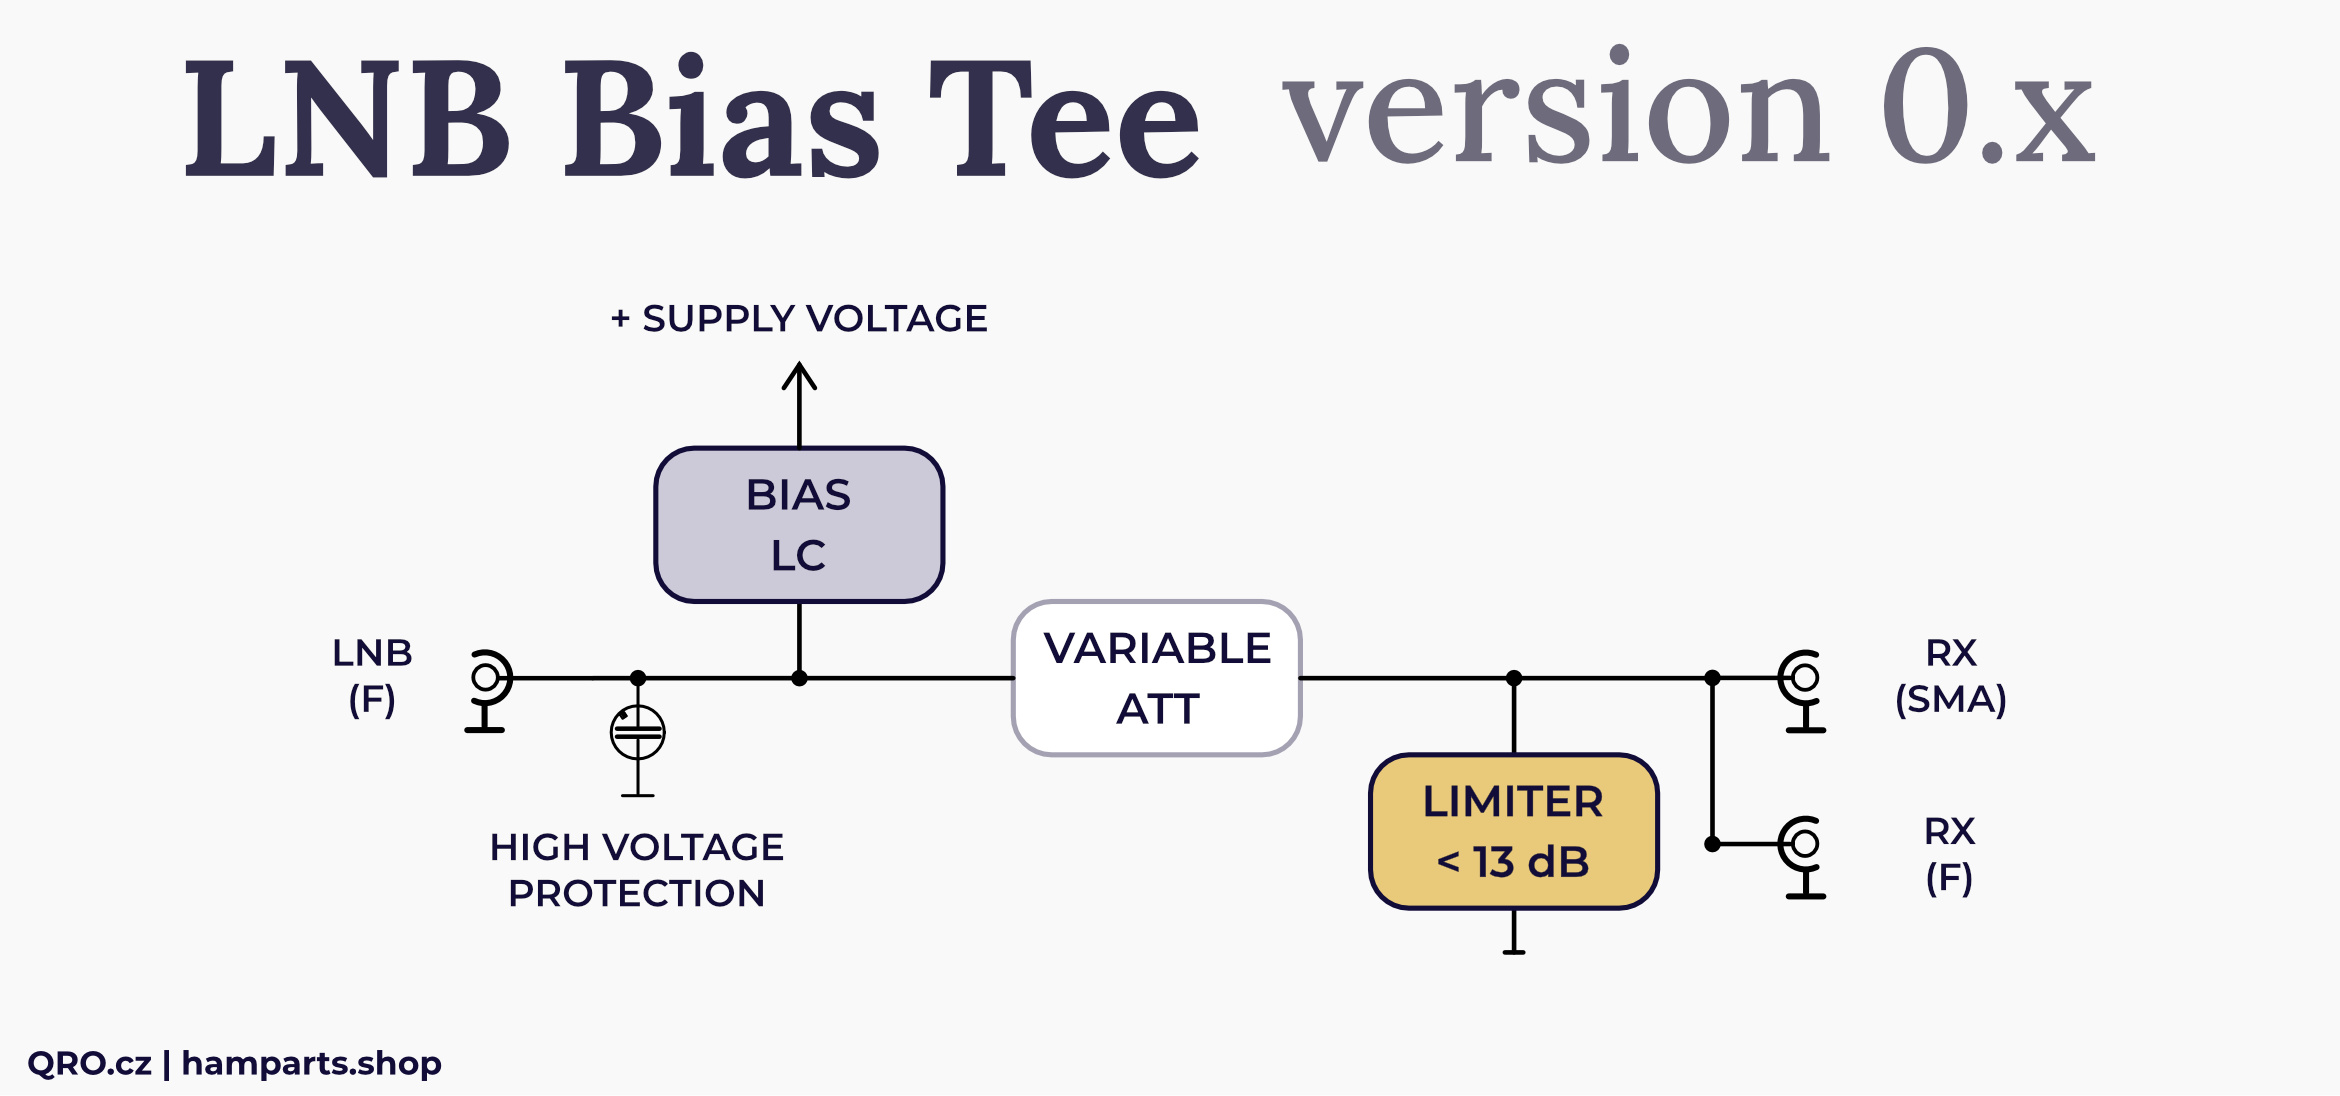 LNB bias tee block diagram qro.cz hamparts.shop